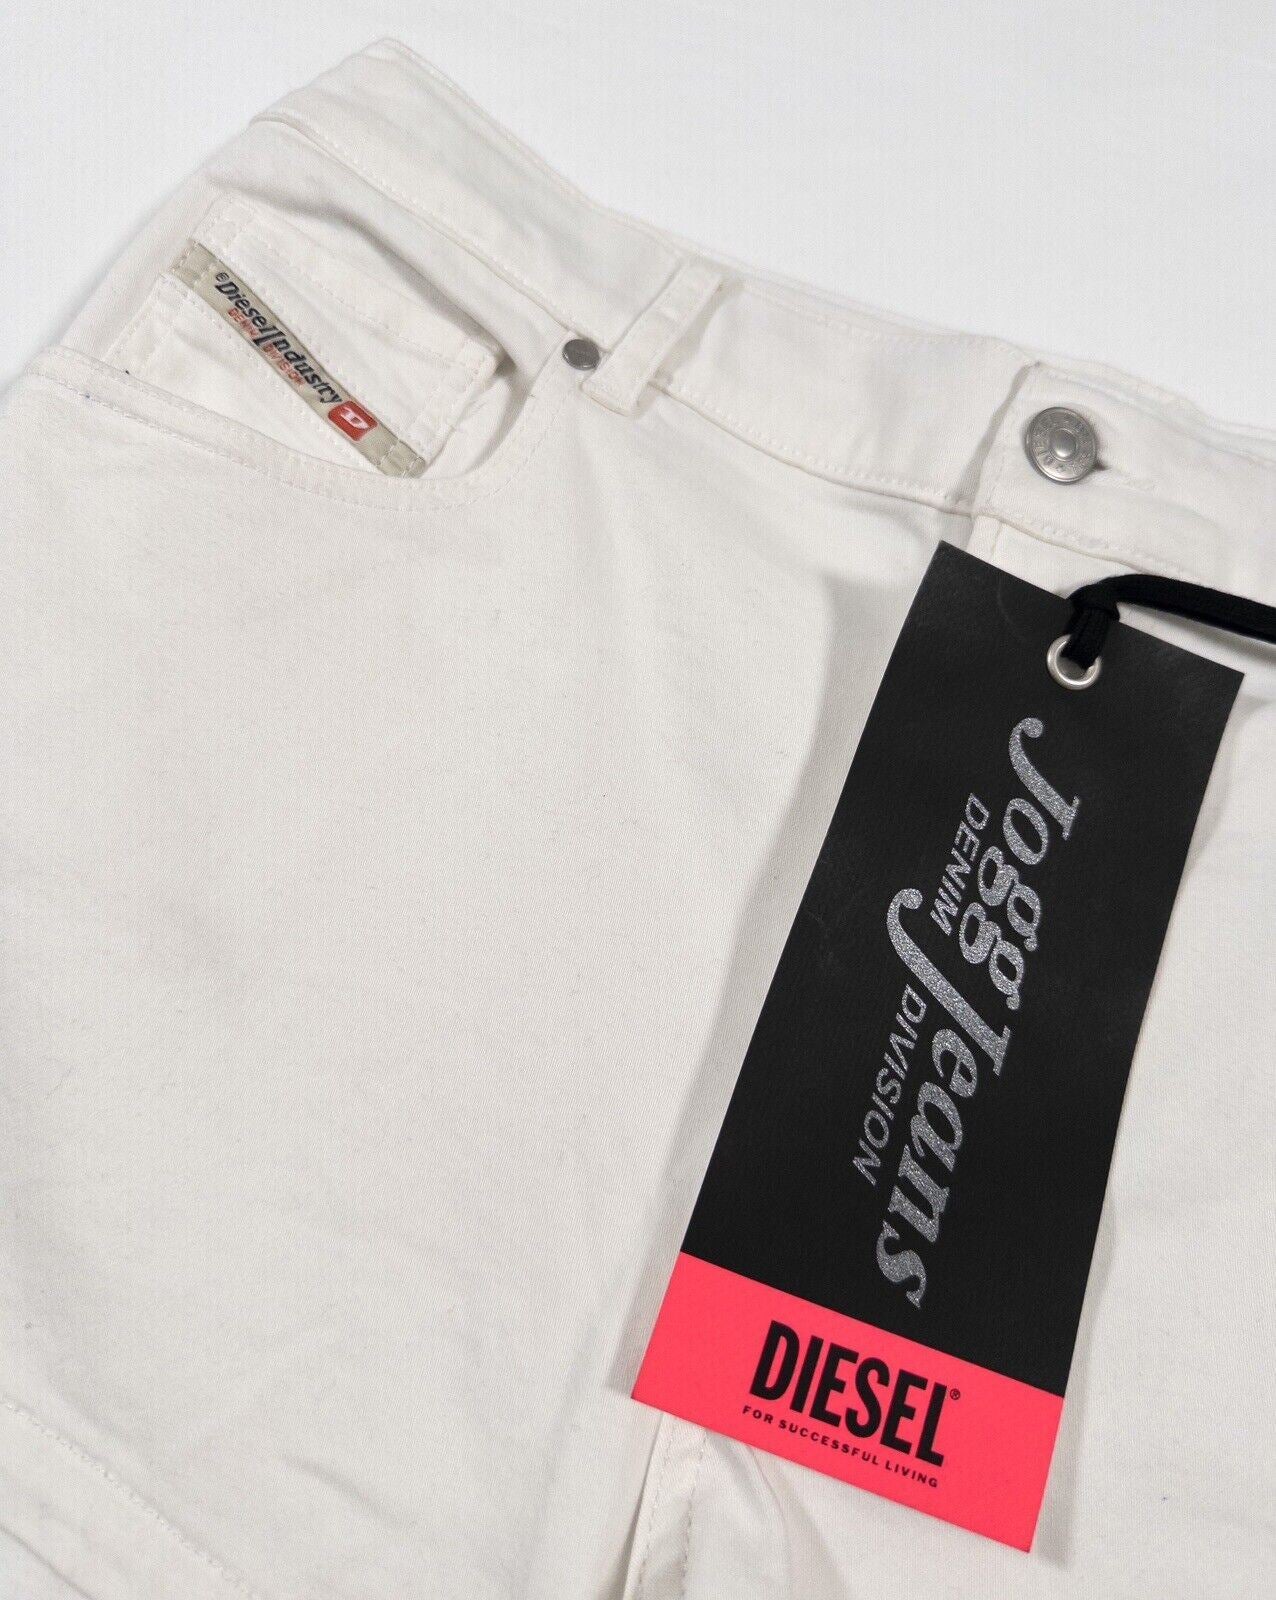 DIESEL Jogg Jeans Womens White Denim Shorts Size UK 16 Large